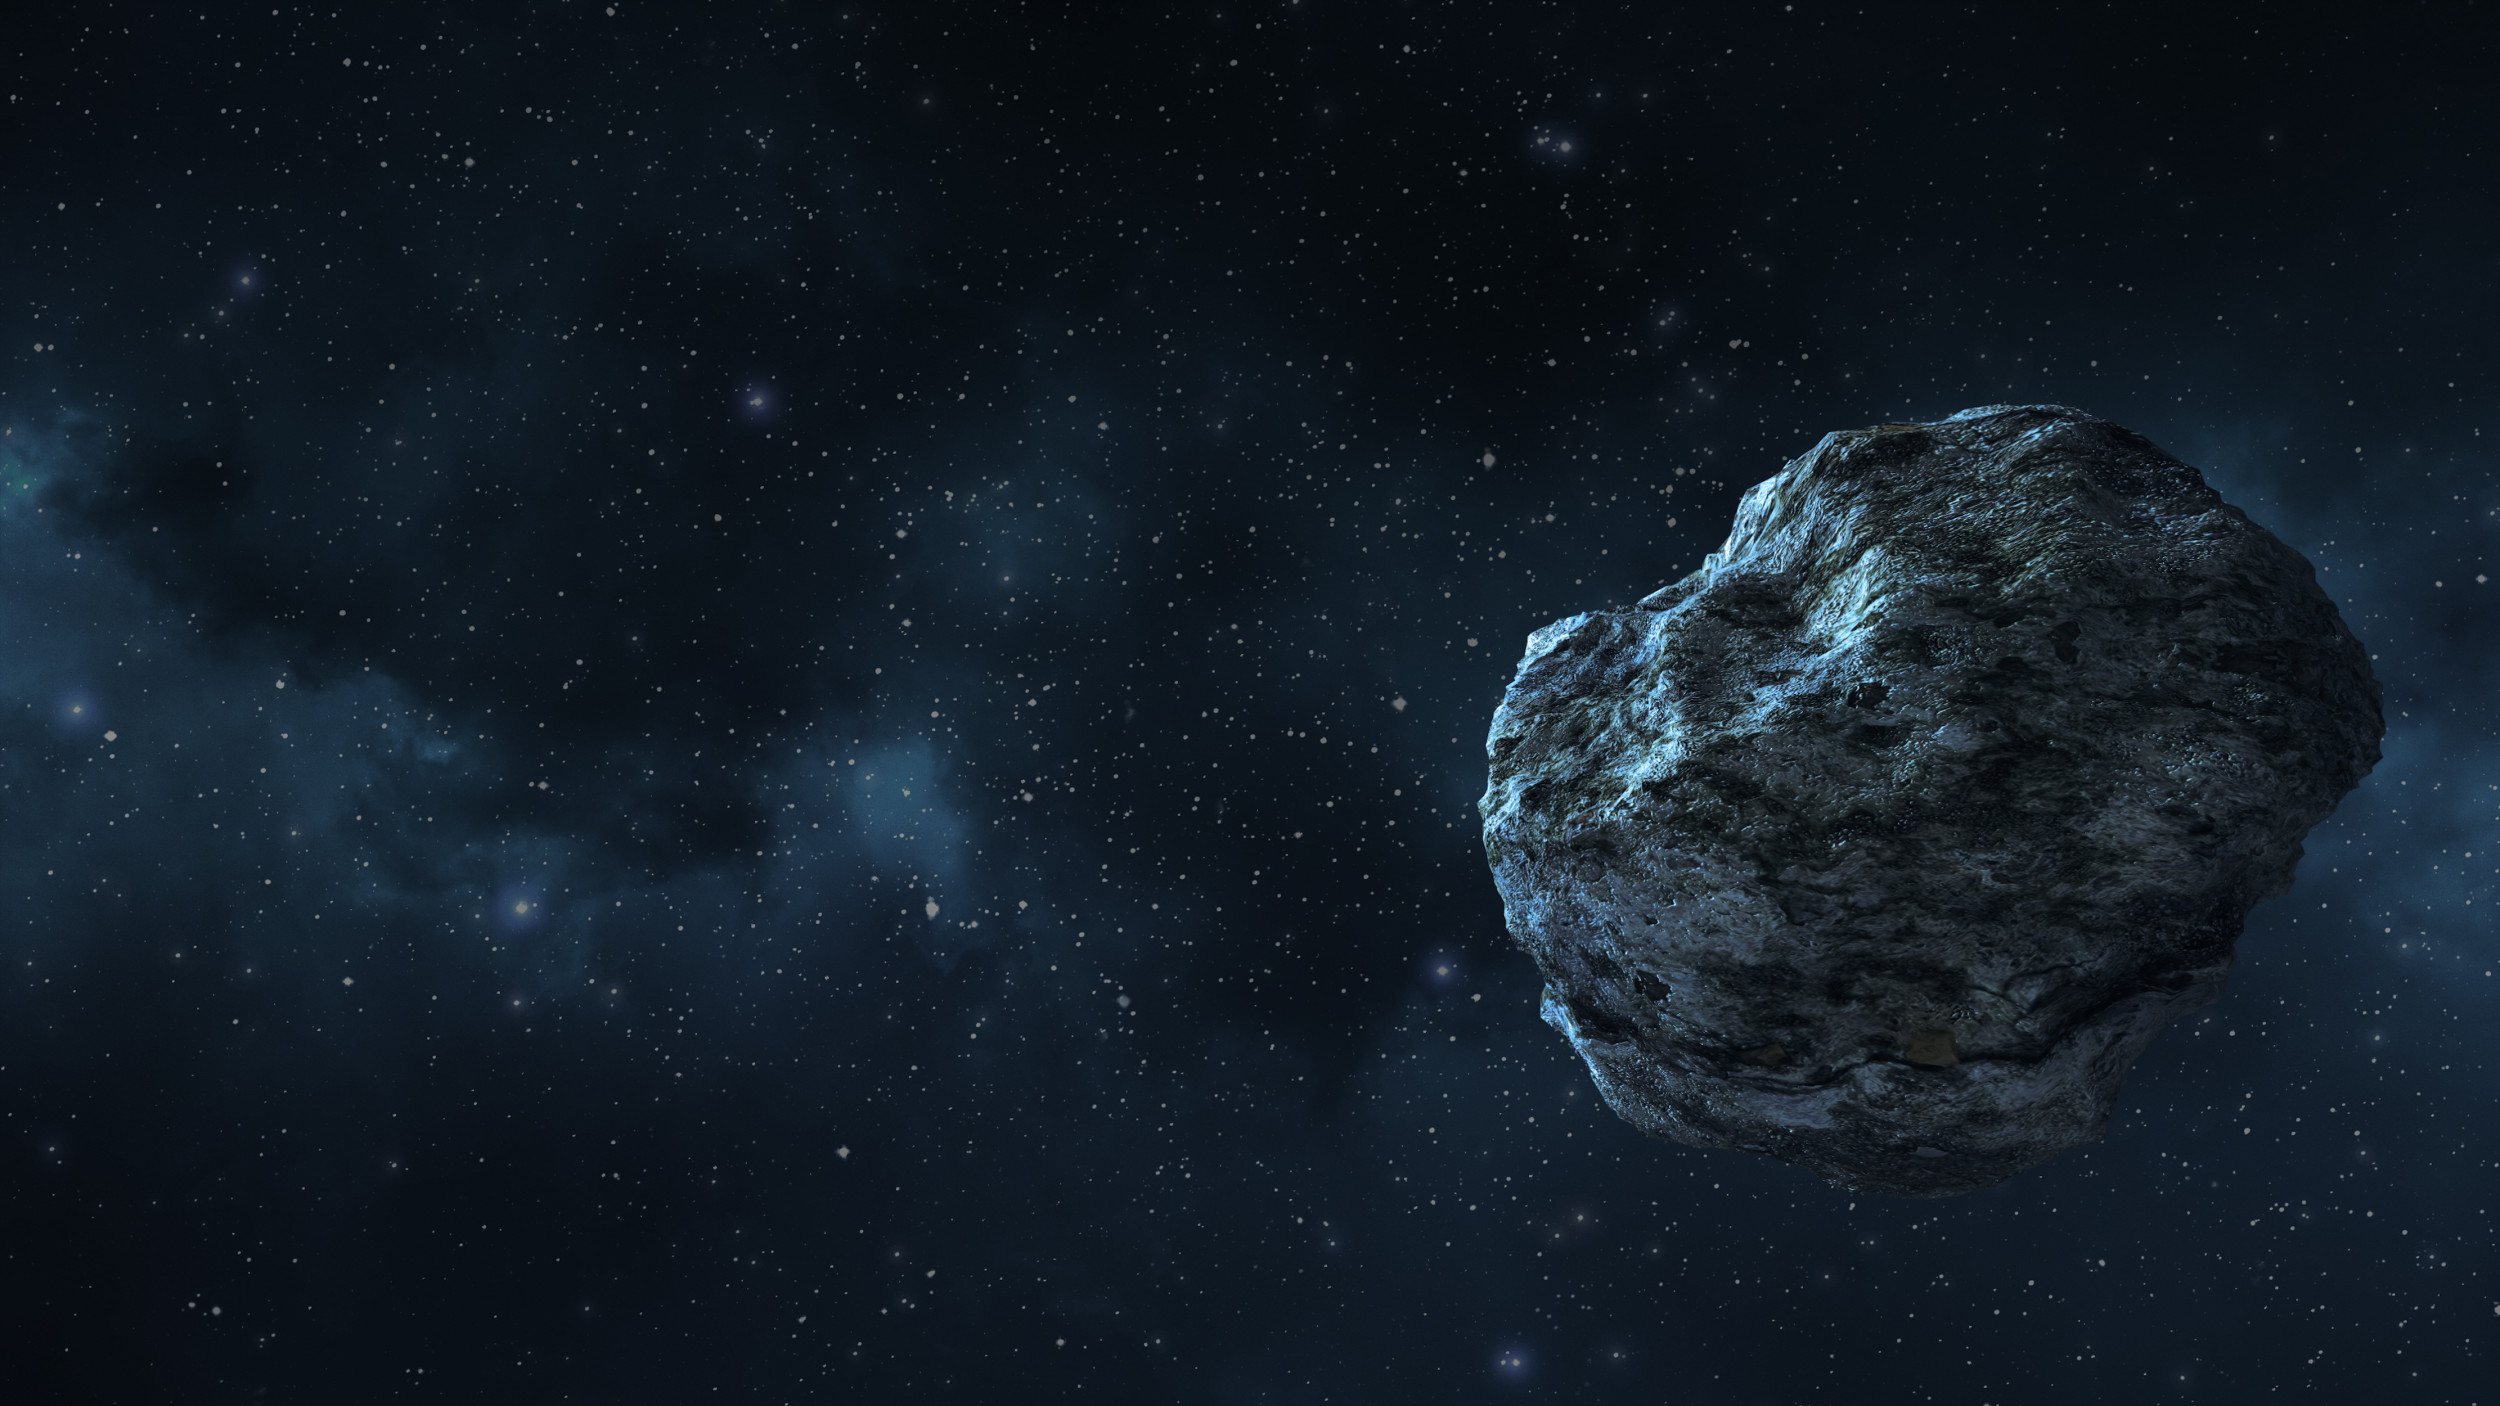 Asteroid, Meteoroid - Meteor Shower October 2019 - HD Wallpaper 